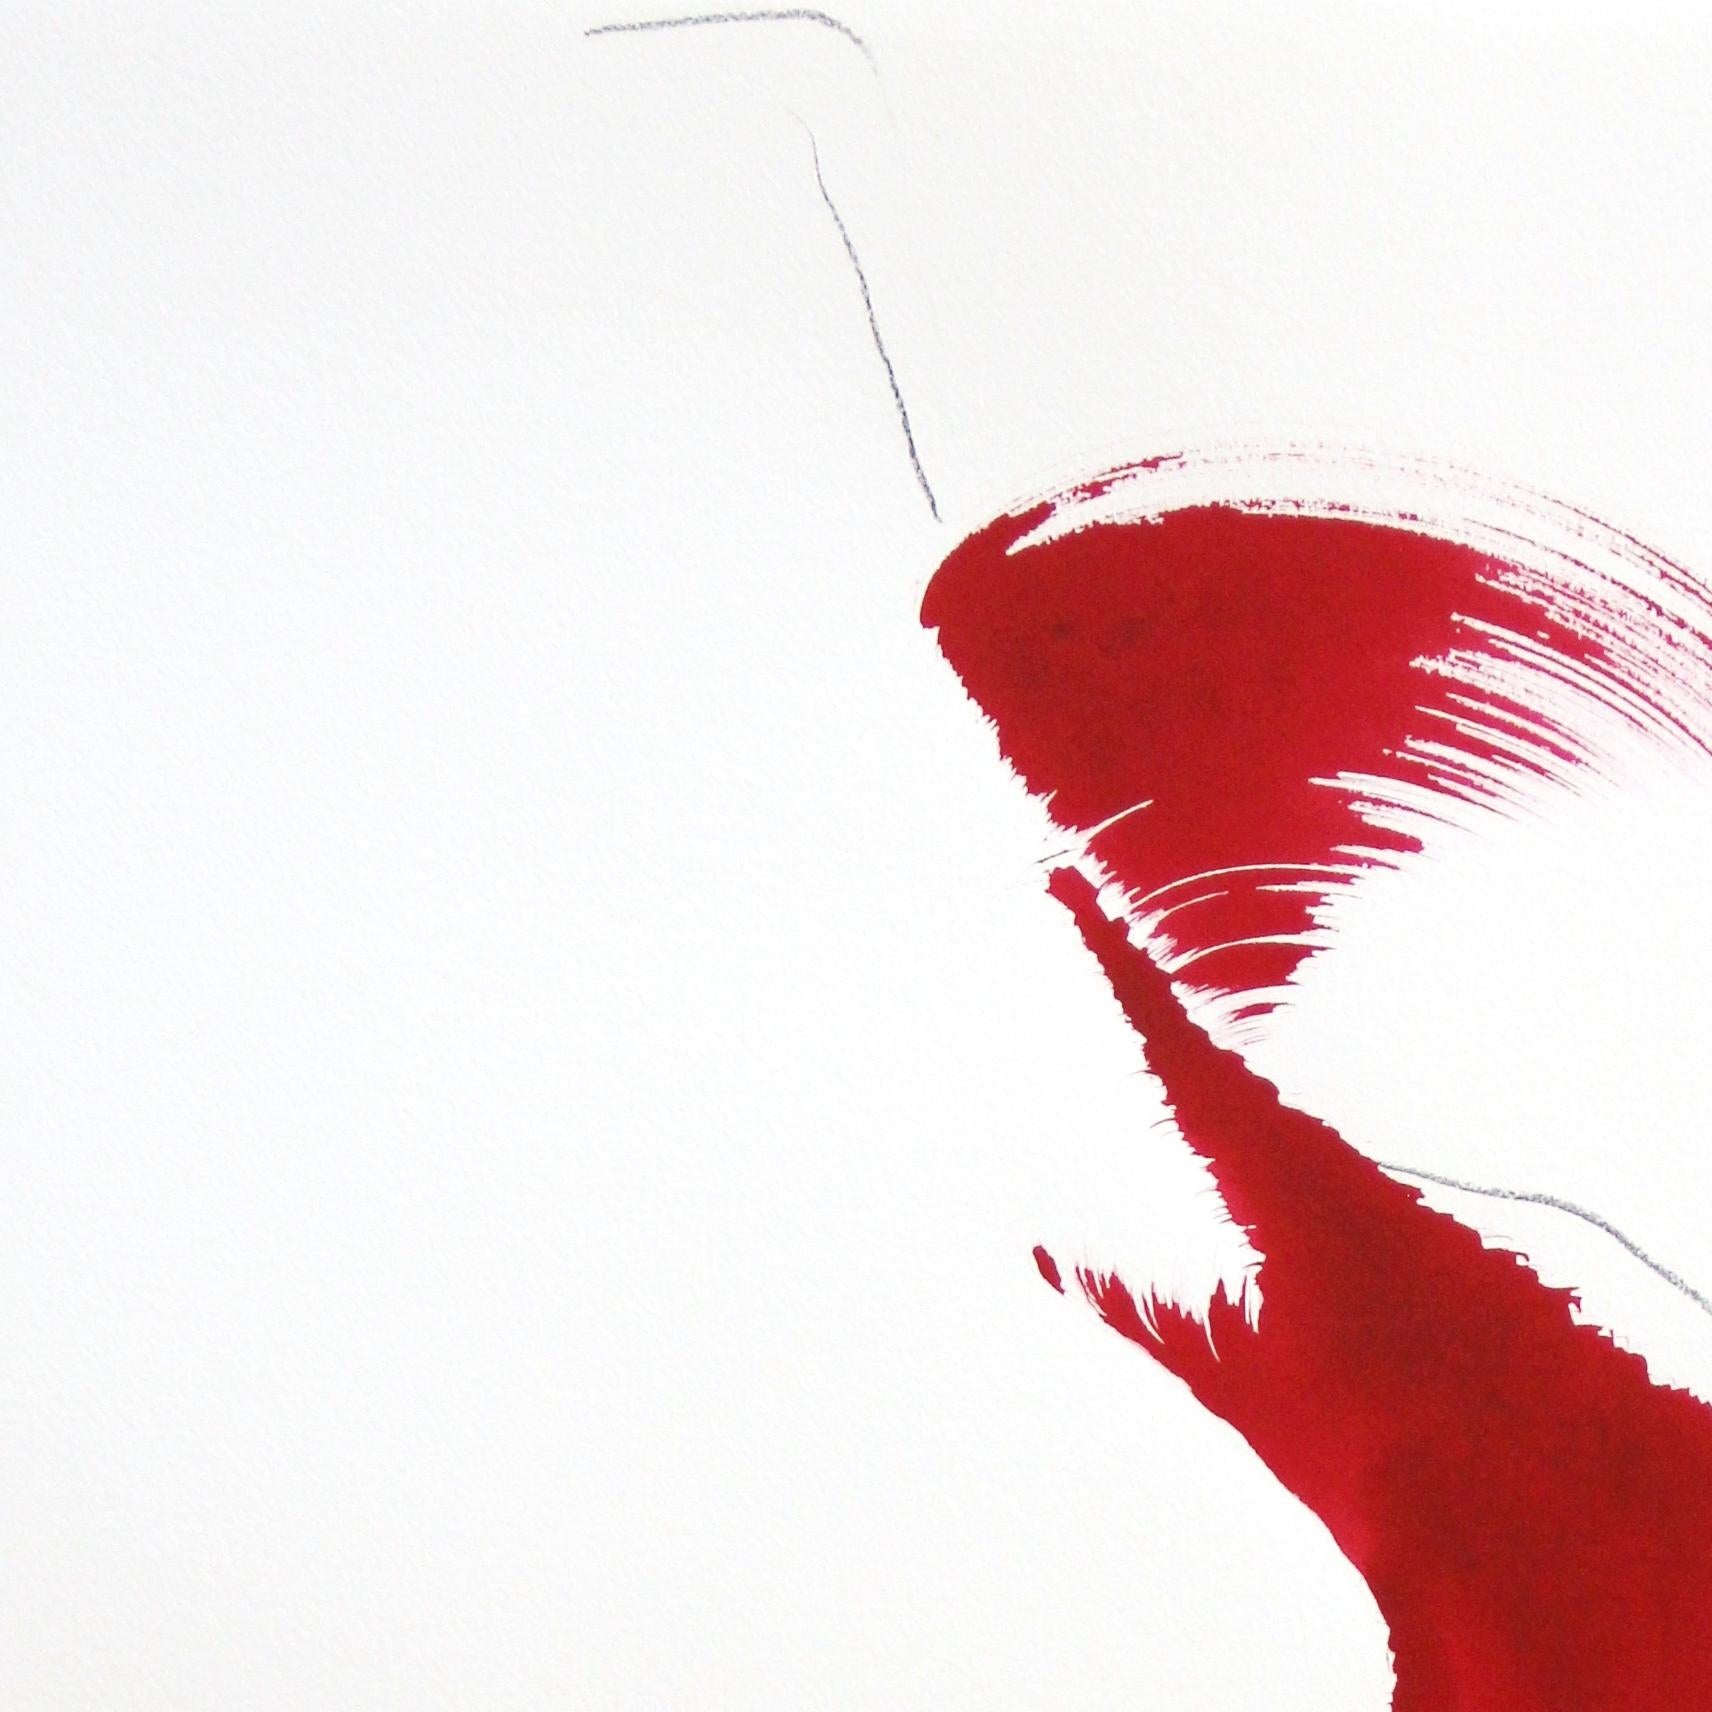 The Red Cloth 90 - Abstract Mixed Media Art by Bettina Mauel